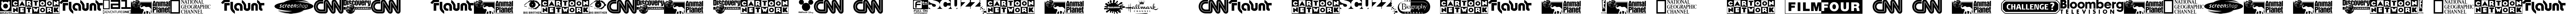 Пример написания шрифтом UK Digital TV Channel Logos текста на испанском